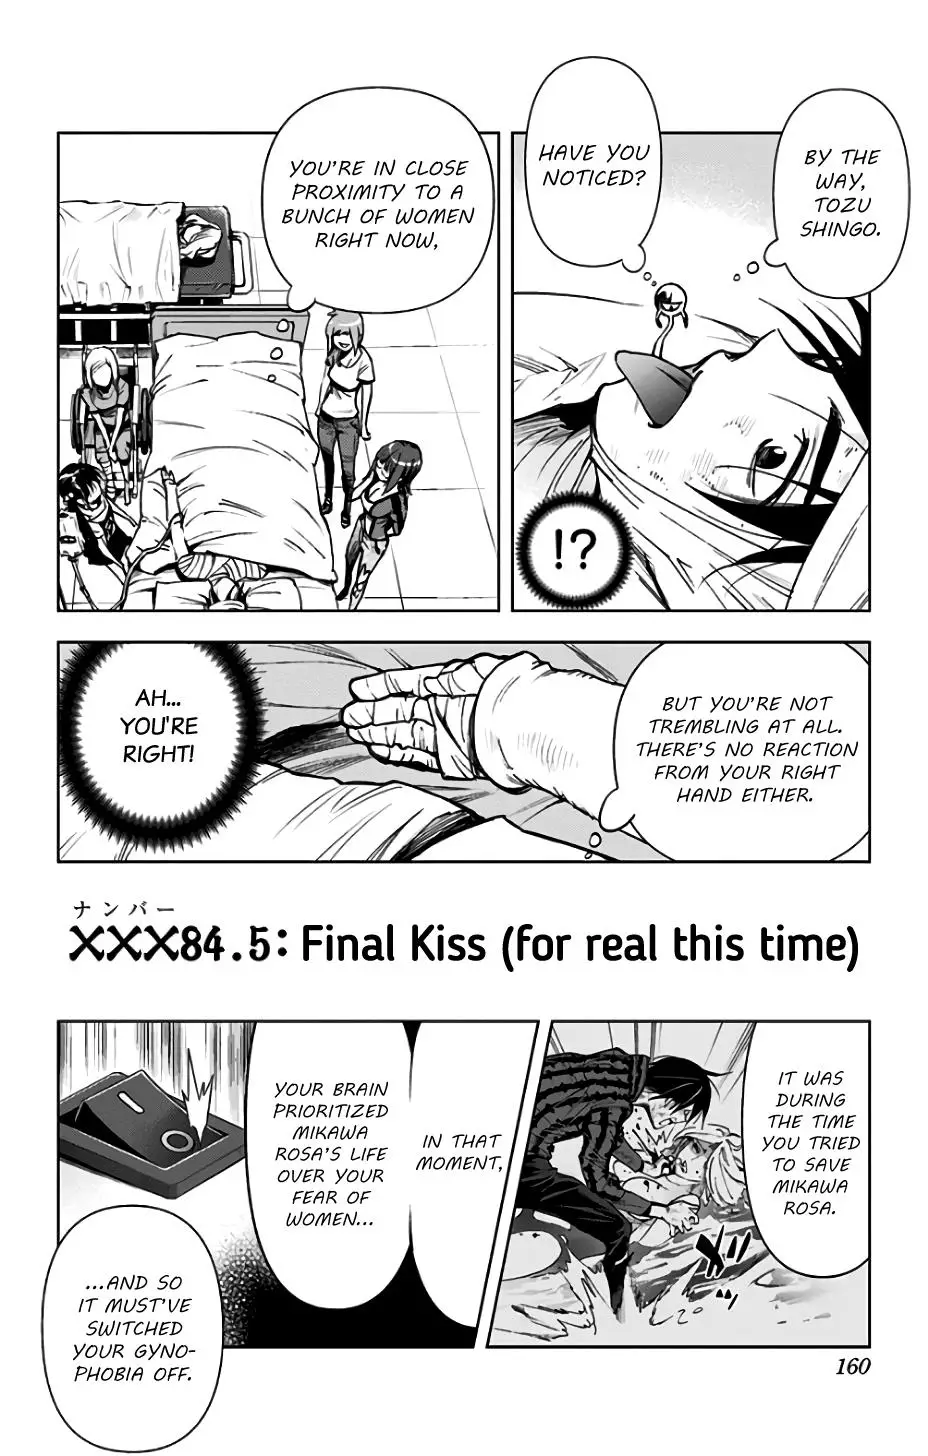 Kiss x Death - 84.5 page 1-1ecab615